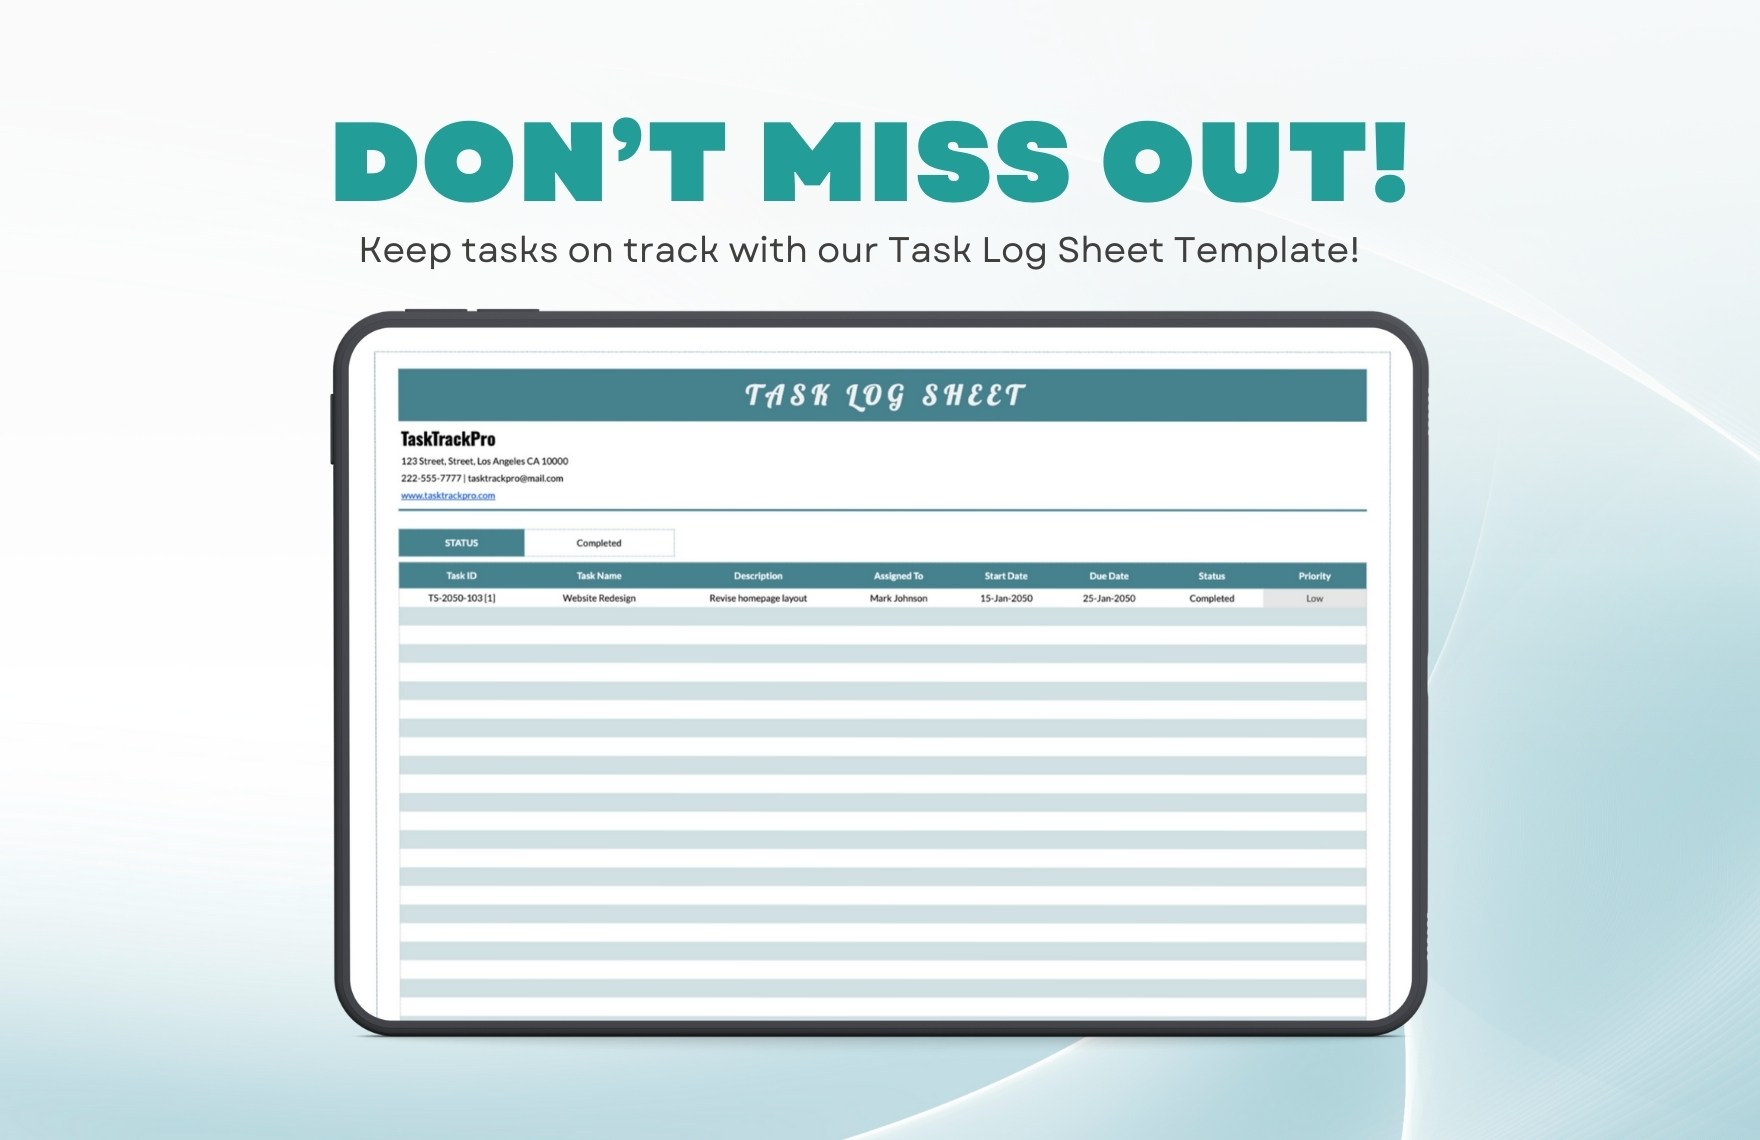 Task Log Sheet Template